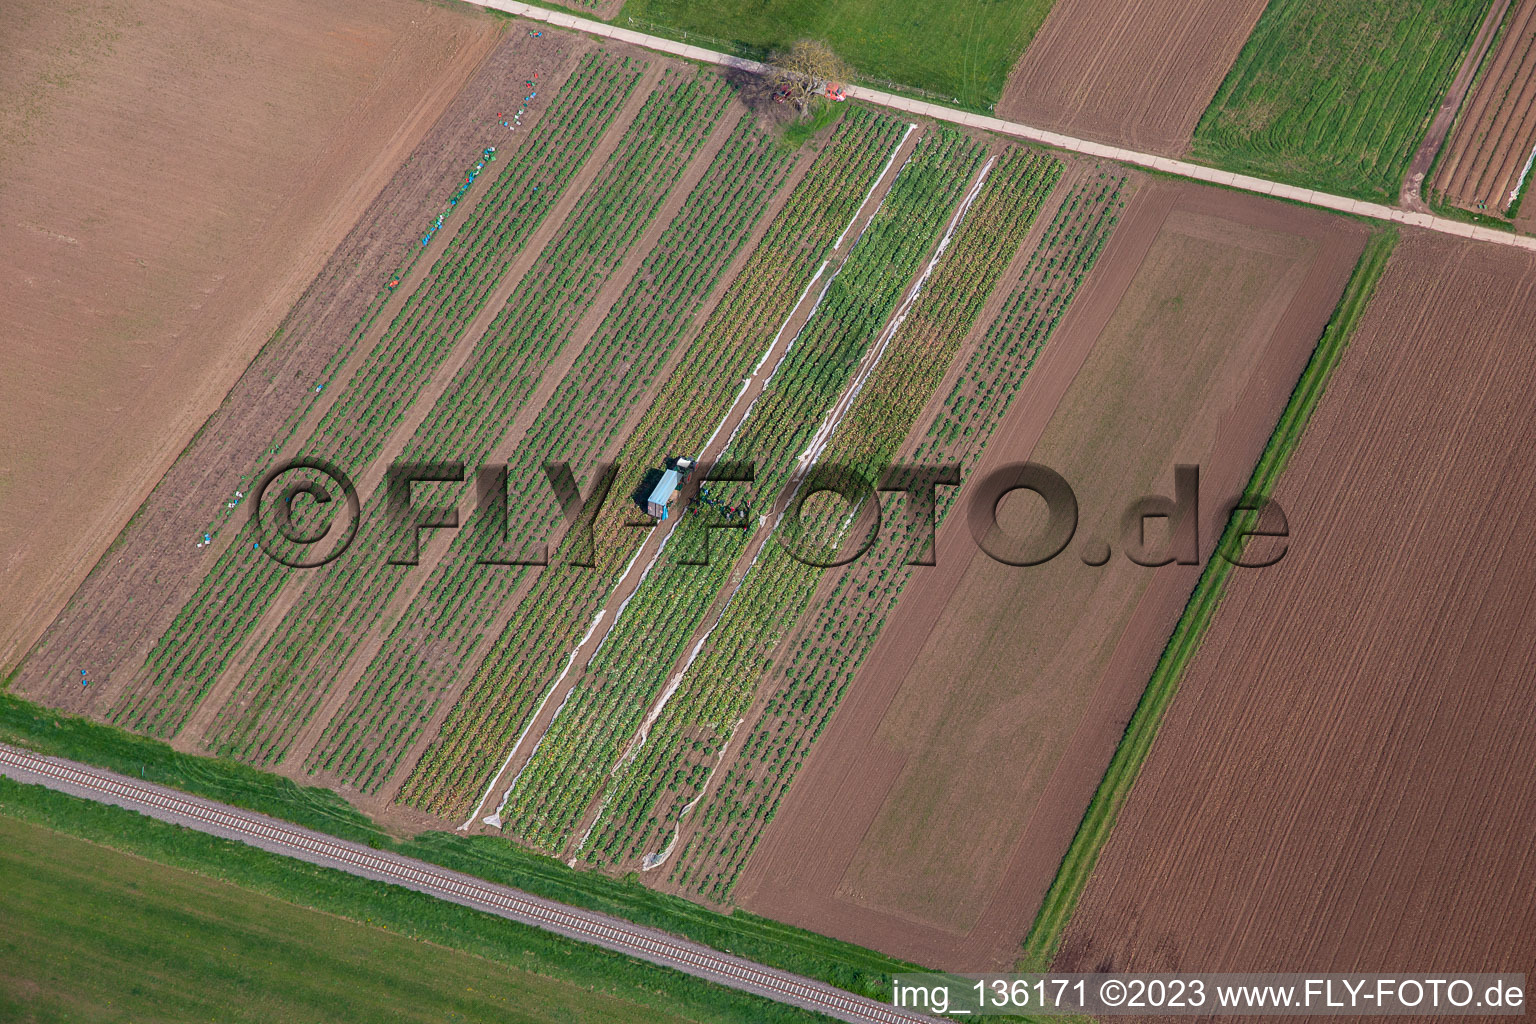 Rhubarb harvest in the district Mühlhofen in Billigheim-Ingenheim in the state Rhineland-Palatinate, Germany